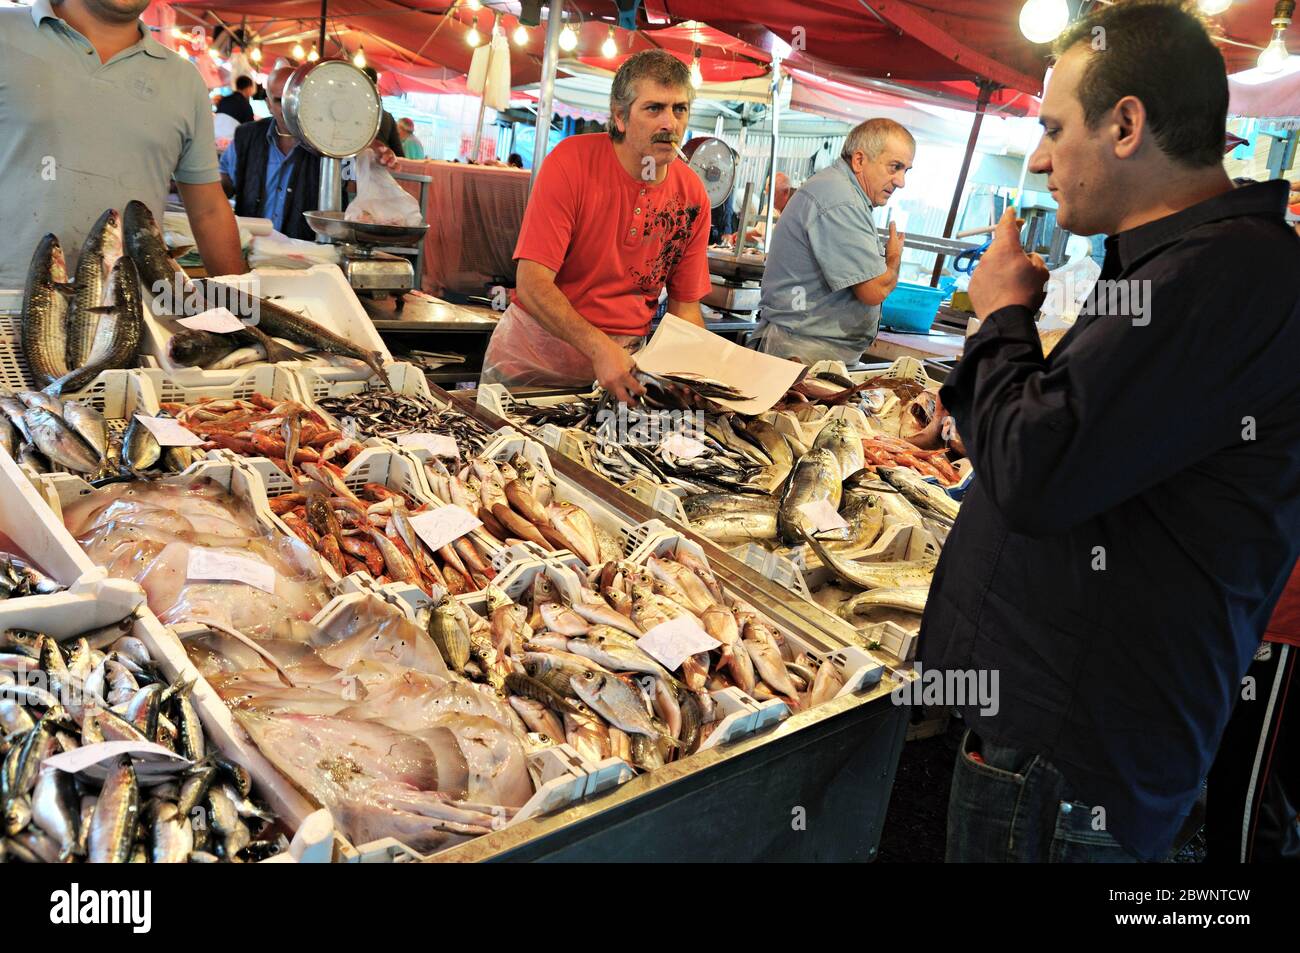 Customer and fishmongers at the Pescheria (fish market) in Catania, Sicily, Italy Stock Photo